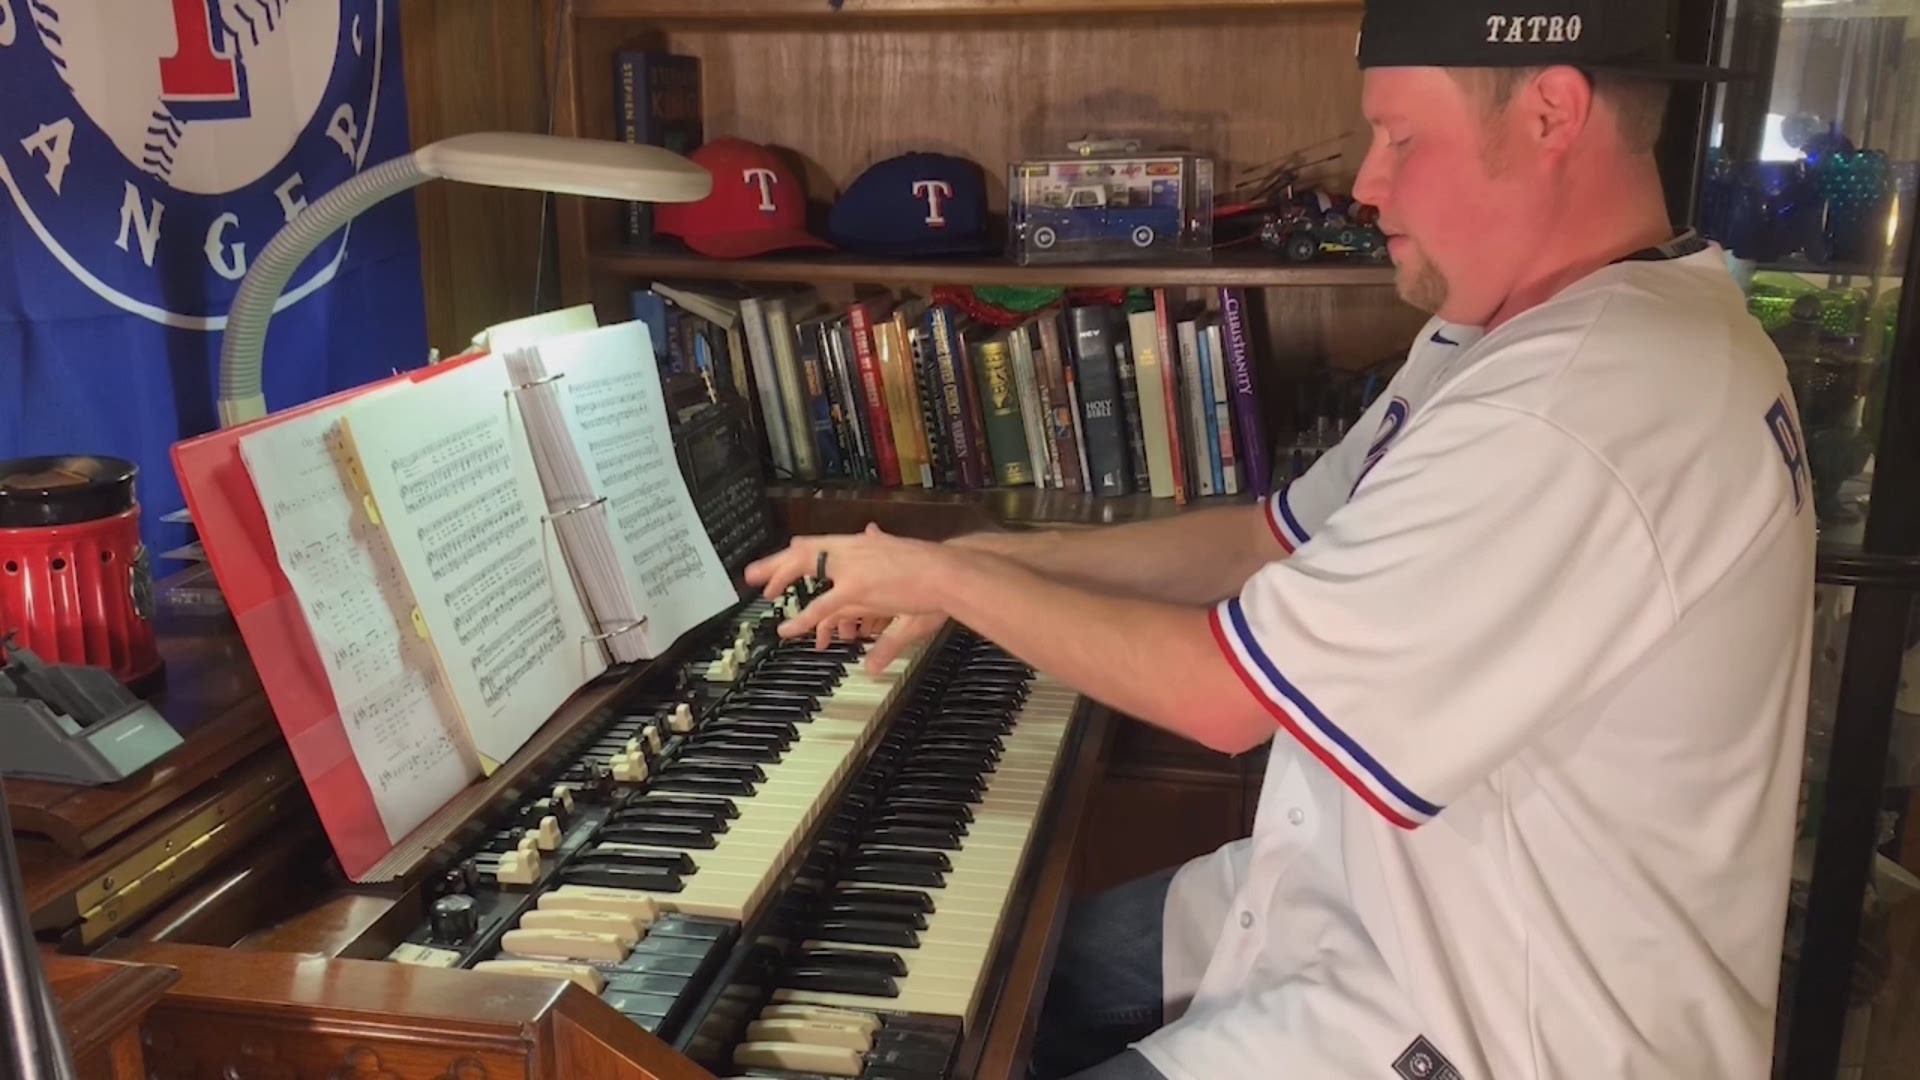 Dustin Tatro is living his dream as the Rangers organist